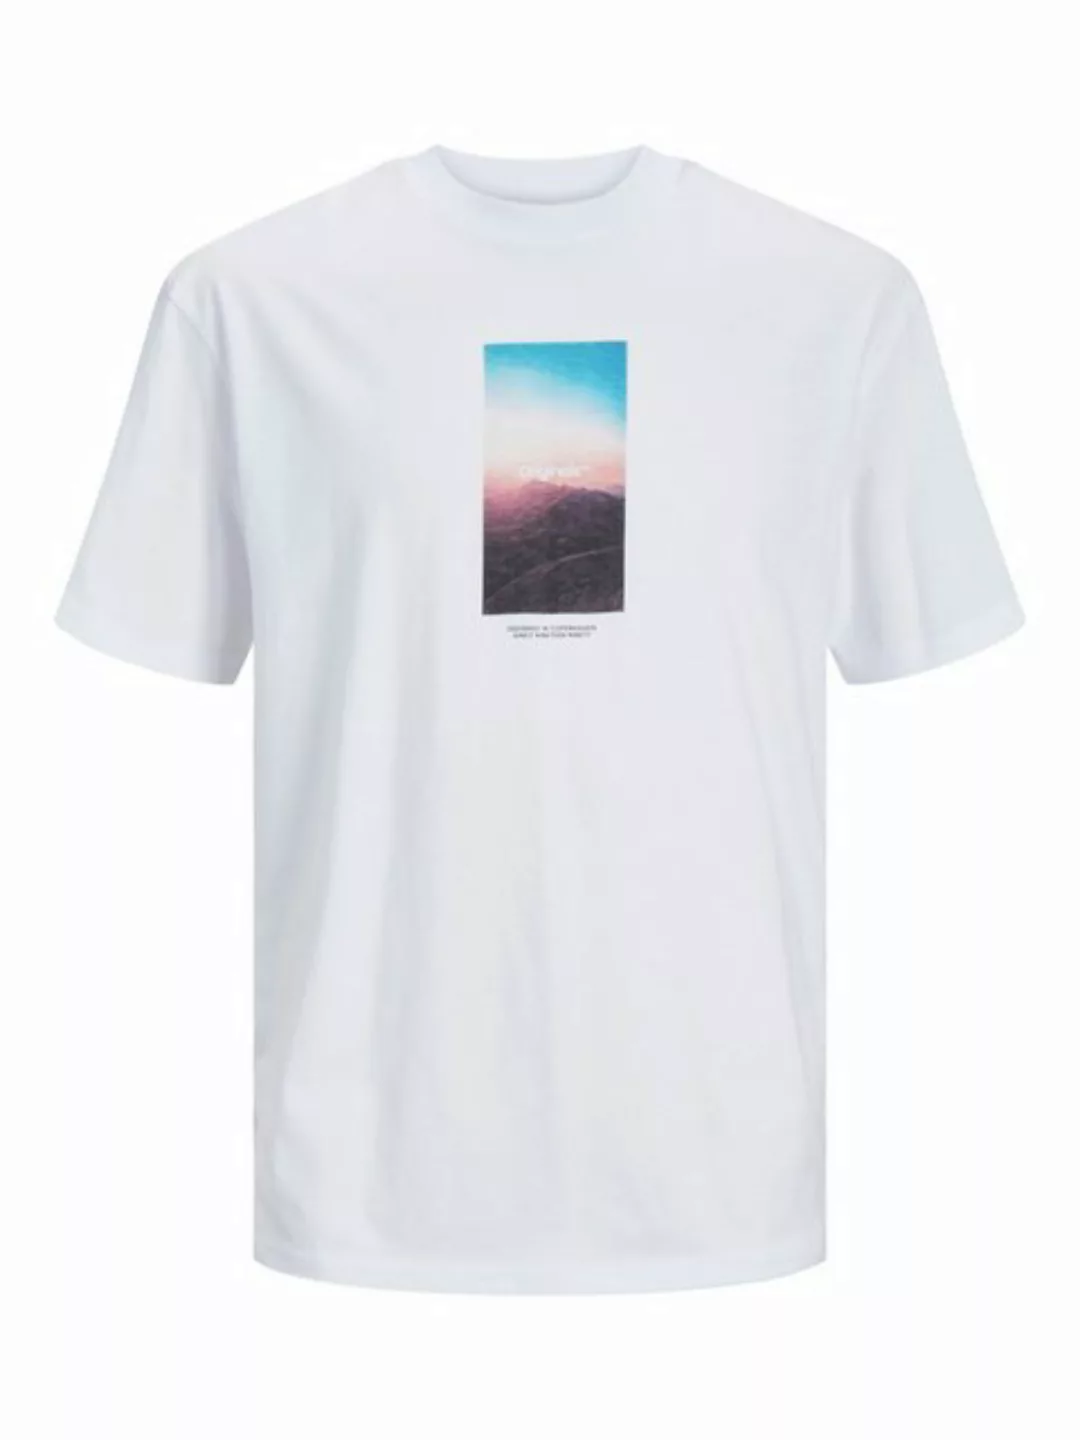 Jack & Jones Herren Rundhals T-Shirt JORVESTERBRO PICTURE - Relaxed Fit günstig online kaufen